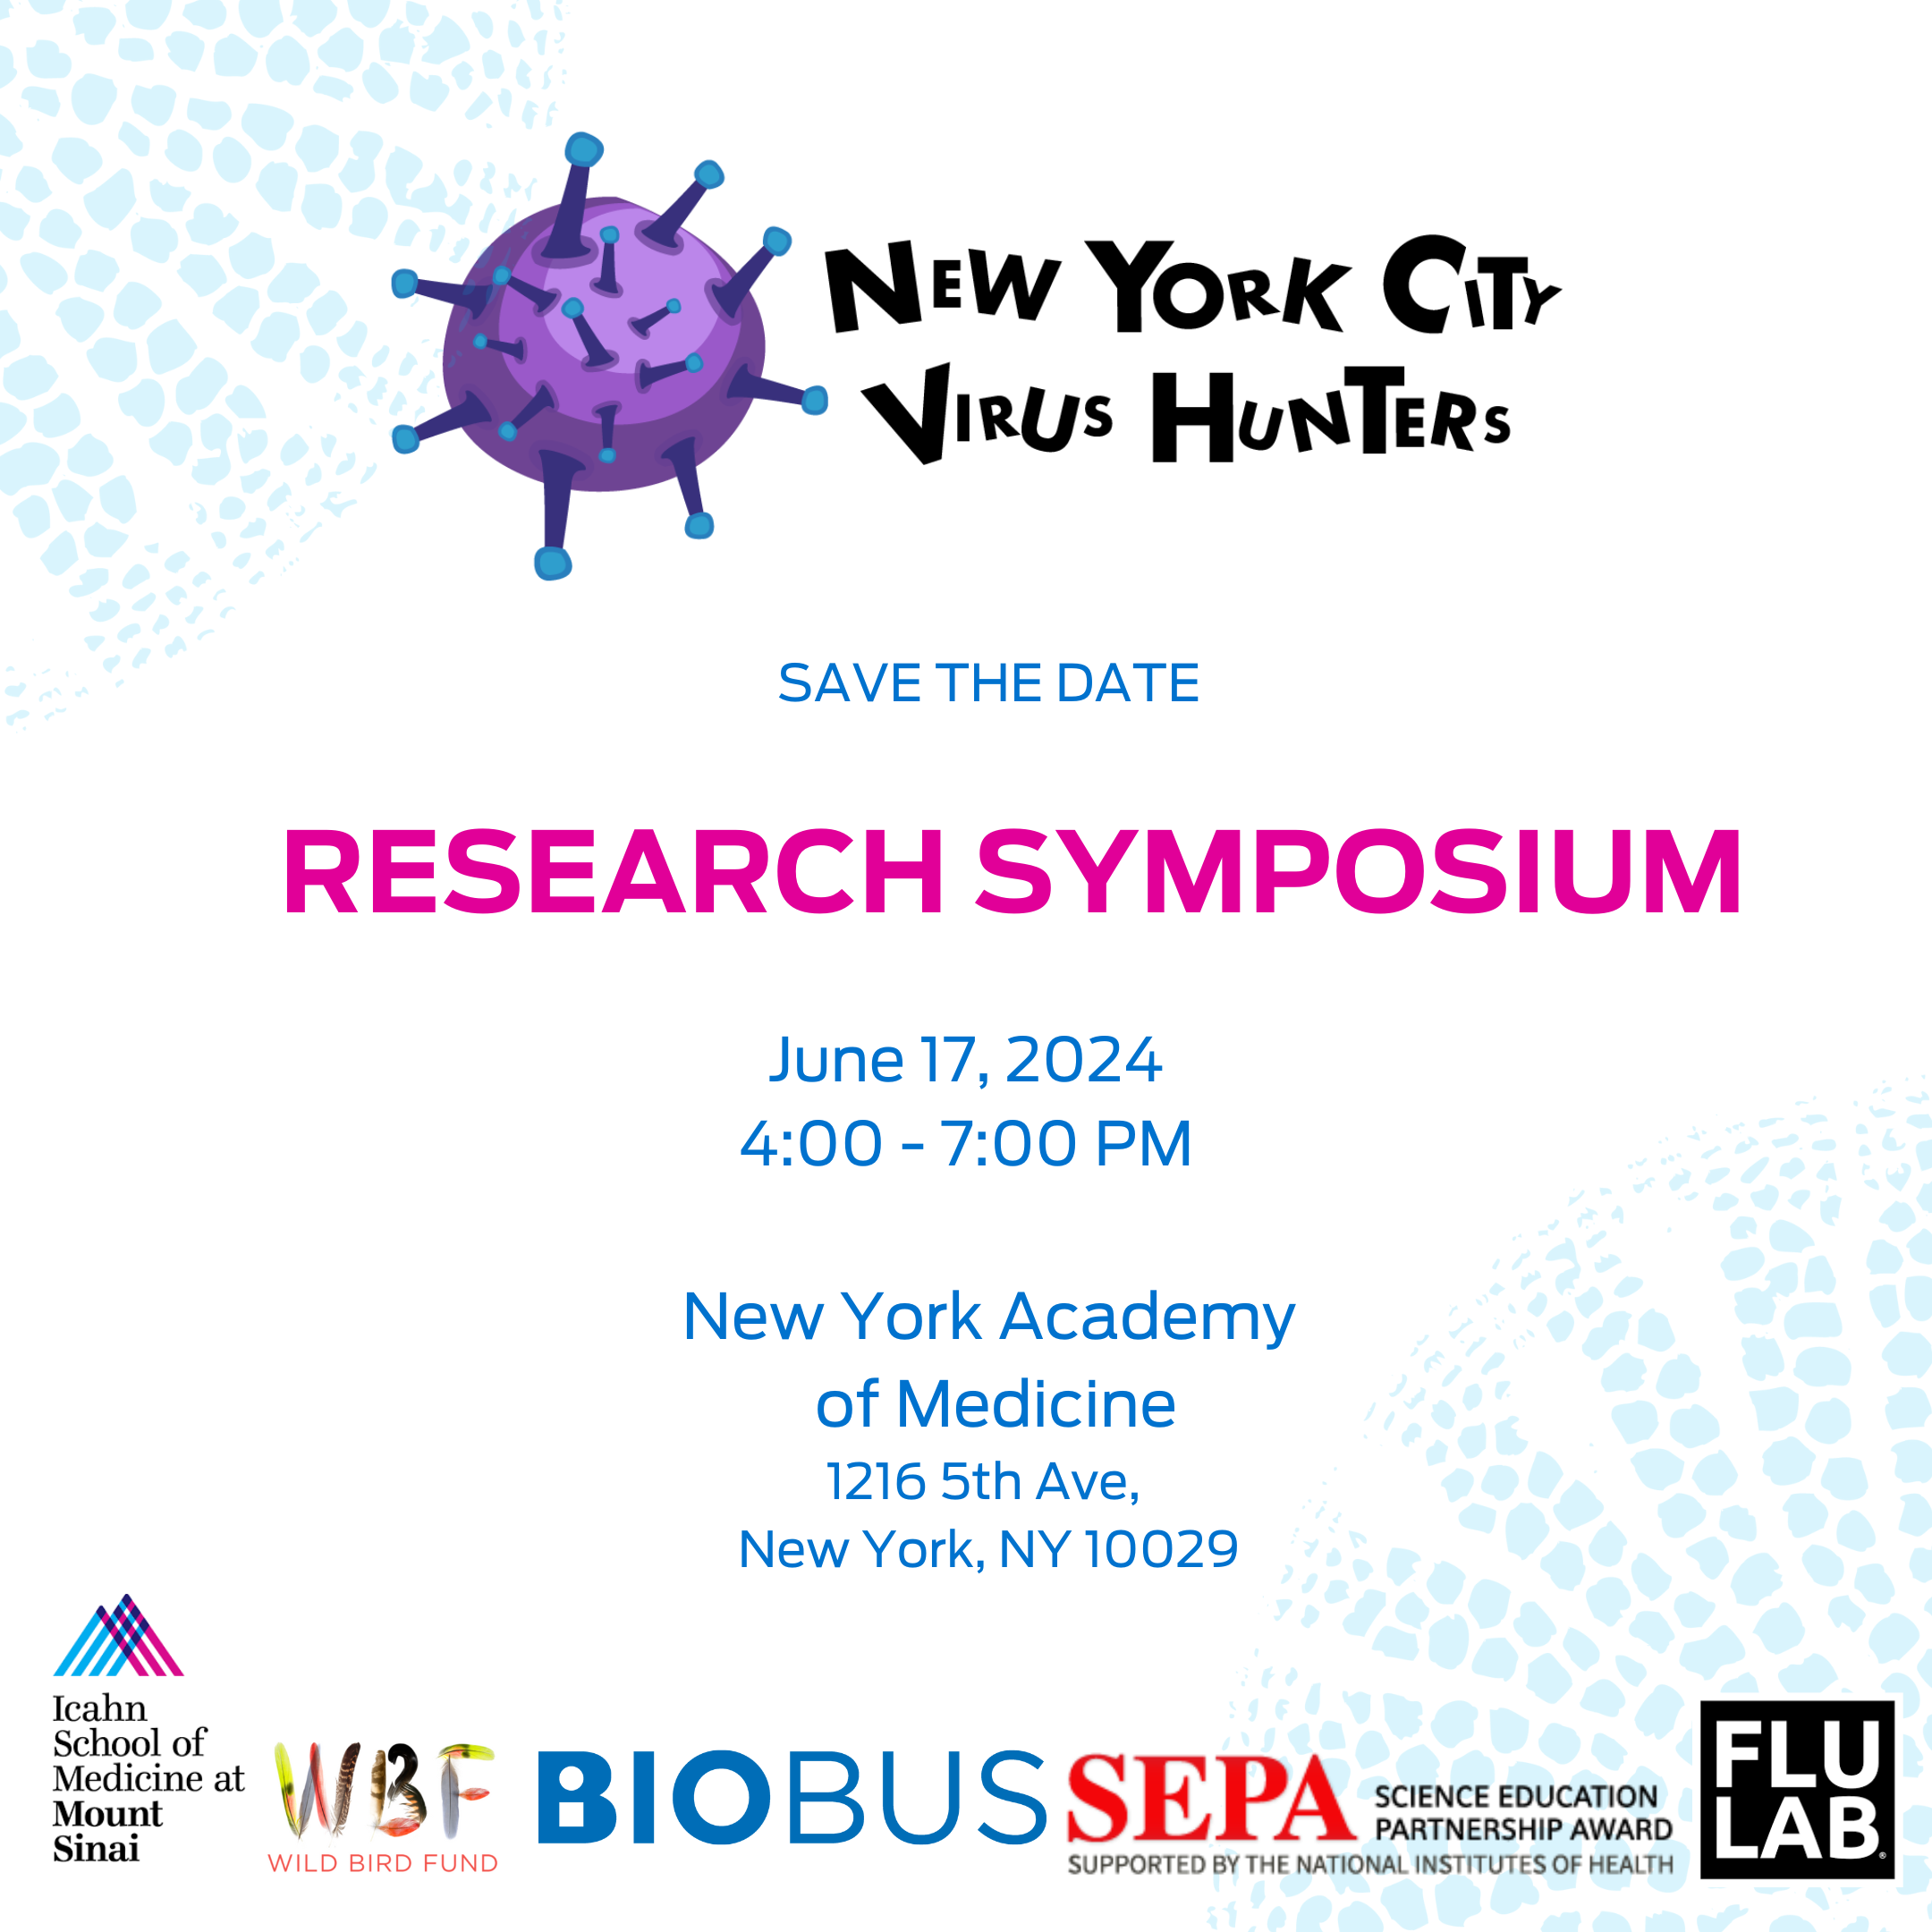 New York City Virus Hunters Research Symposium